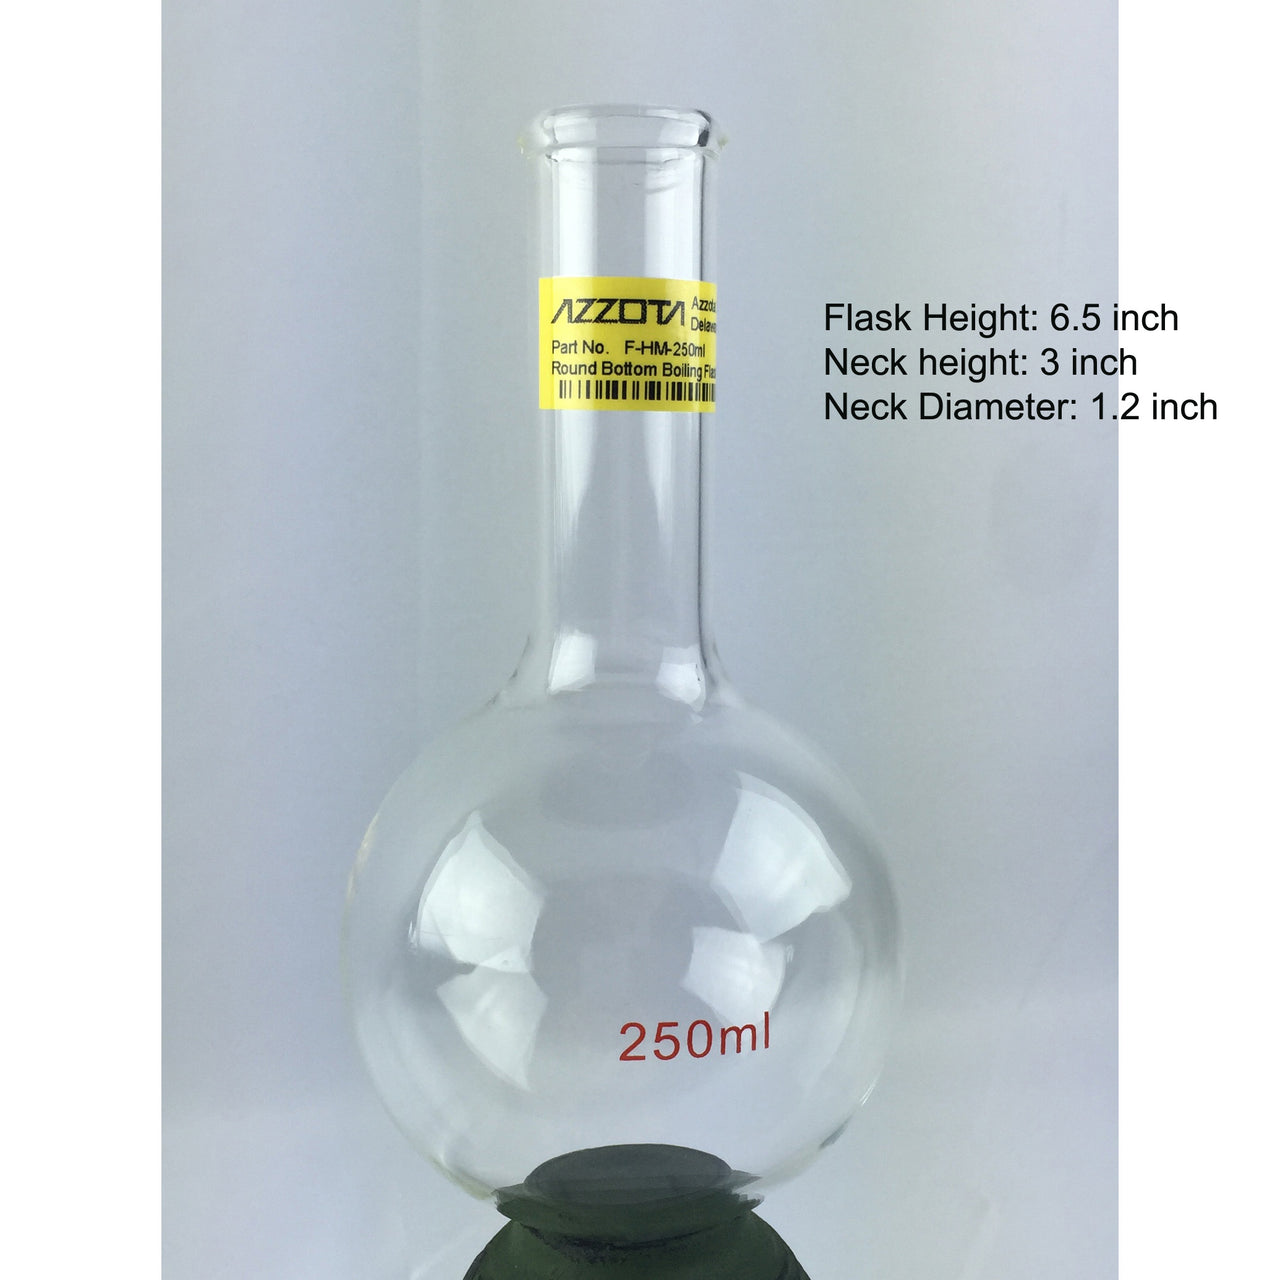 Round Bottom Flask, 250ml 6.5inch flask height